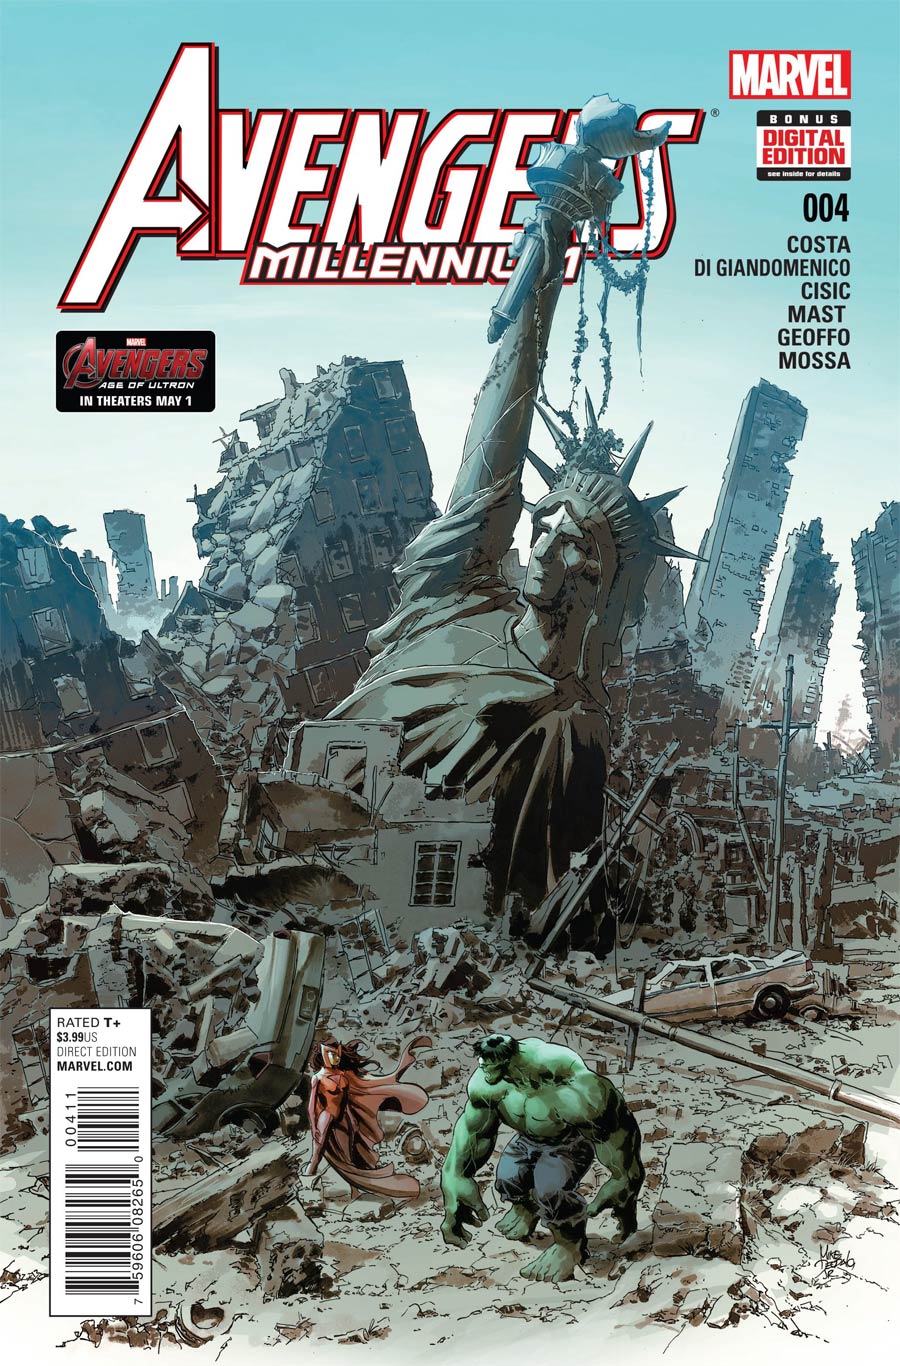 Avengers Millennium #4